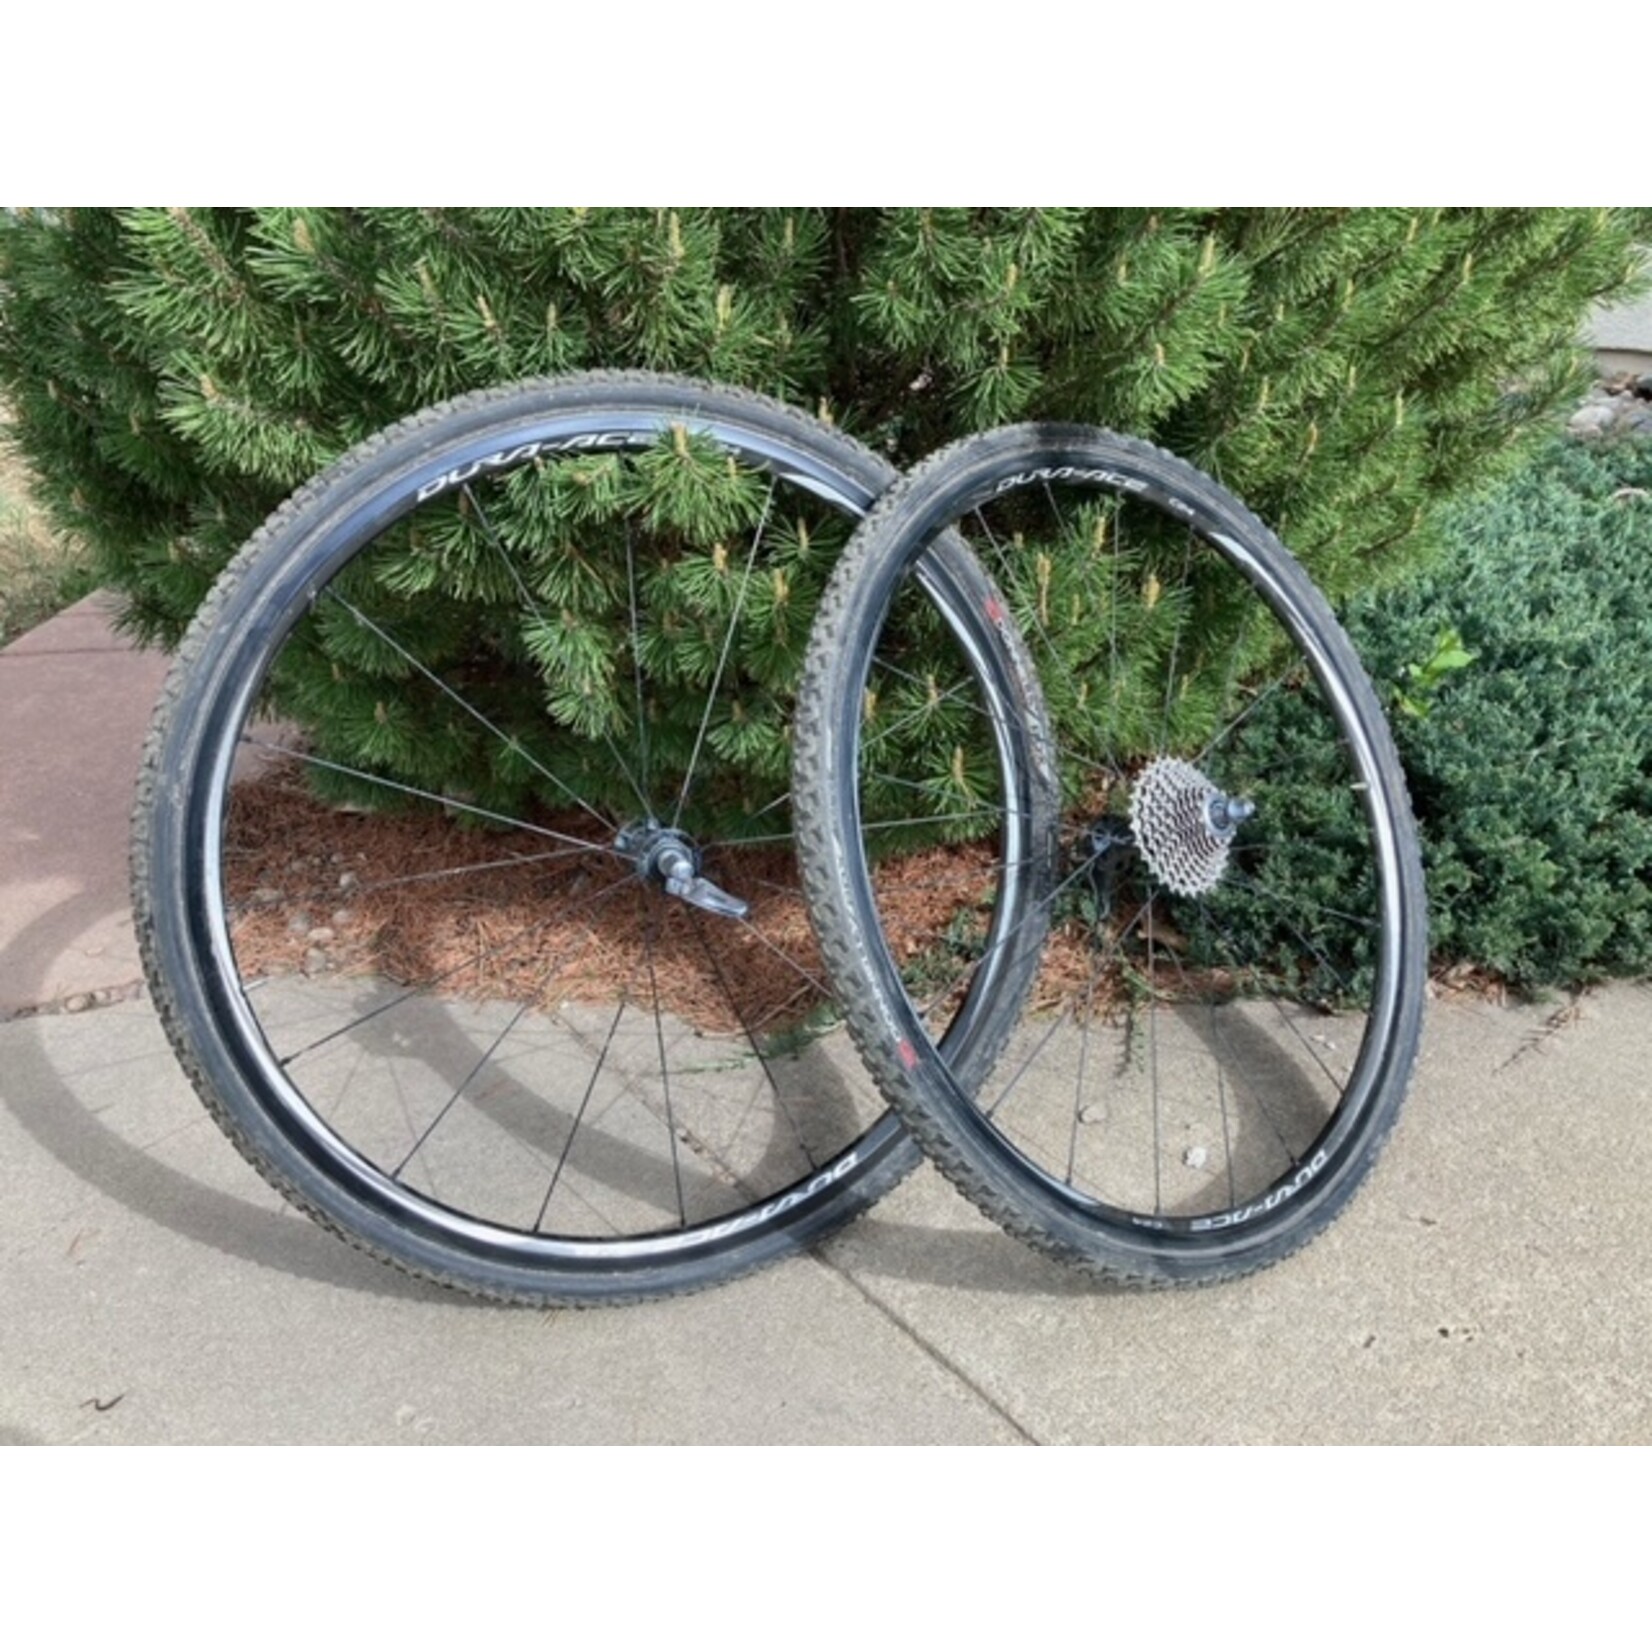 Zinn Cycles Pre-owned custom magnesium cyclocross bike - Bowen